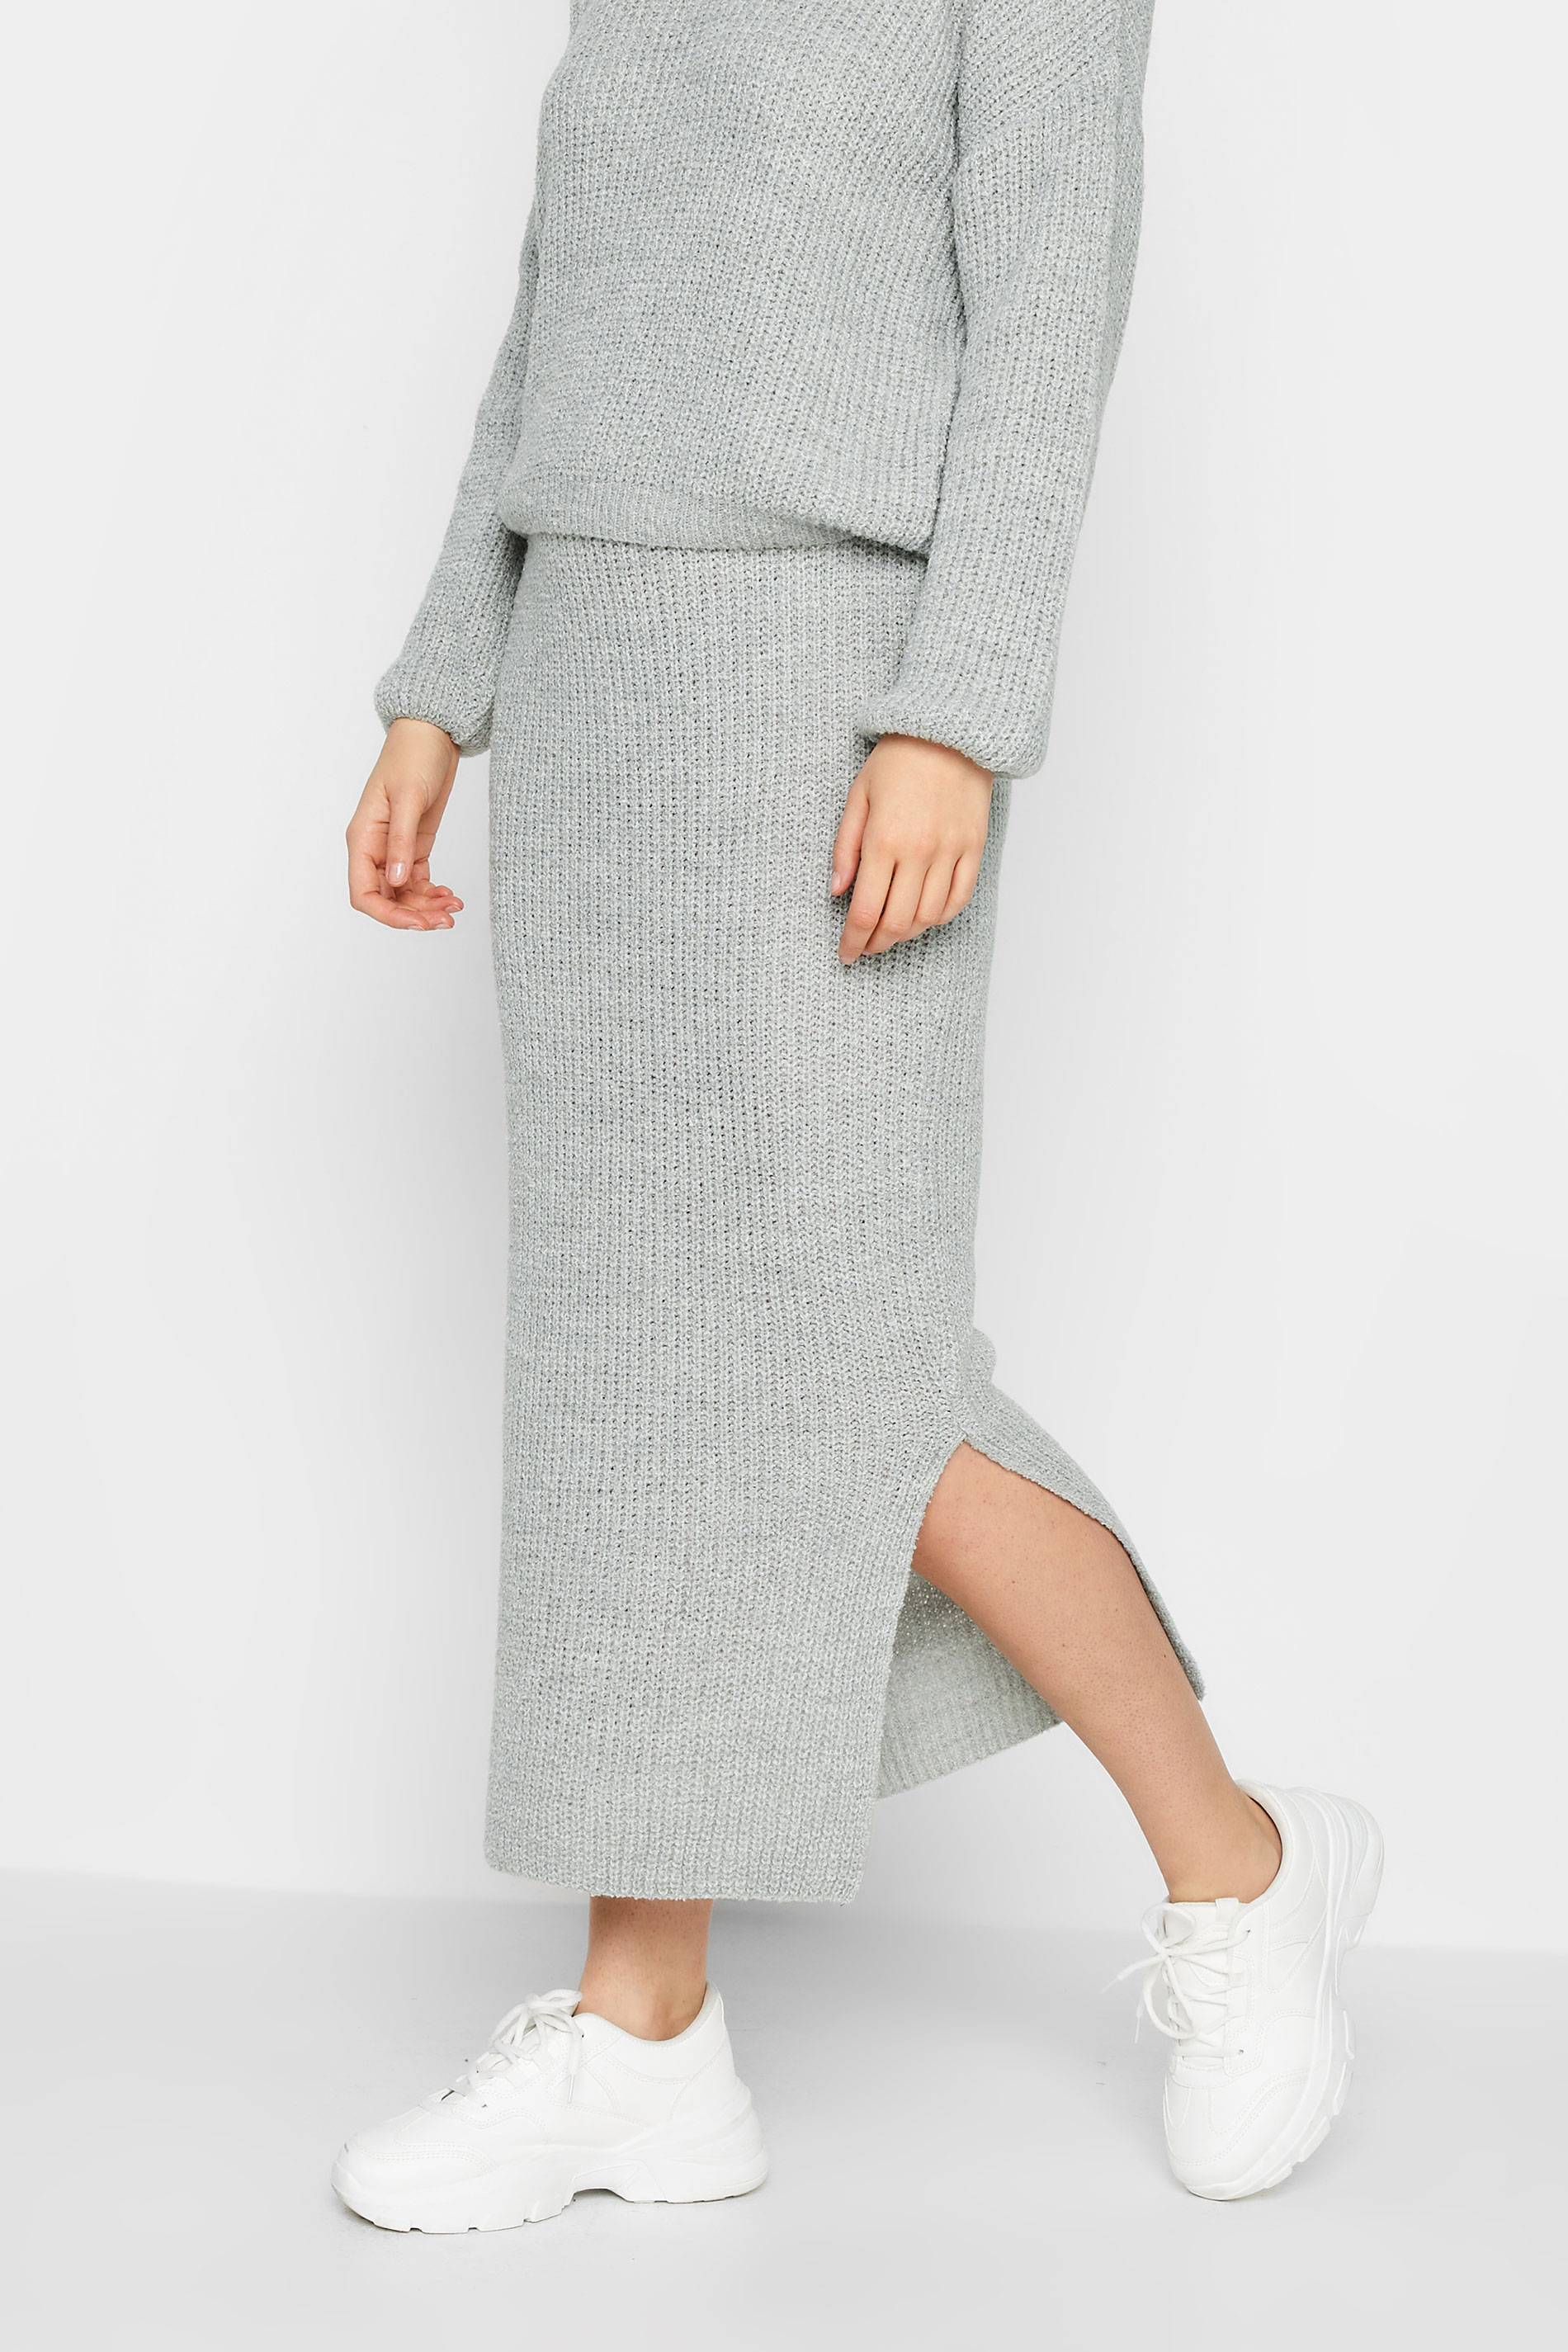 LTS Tall Grey Maxi Knitted Skirt | Long Tall Sally 2